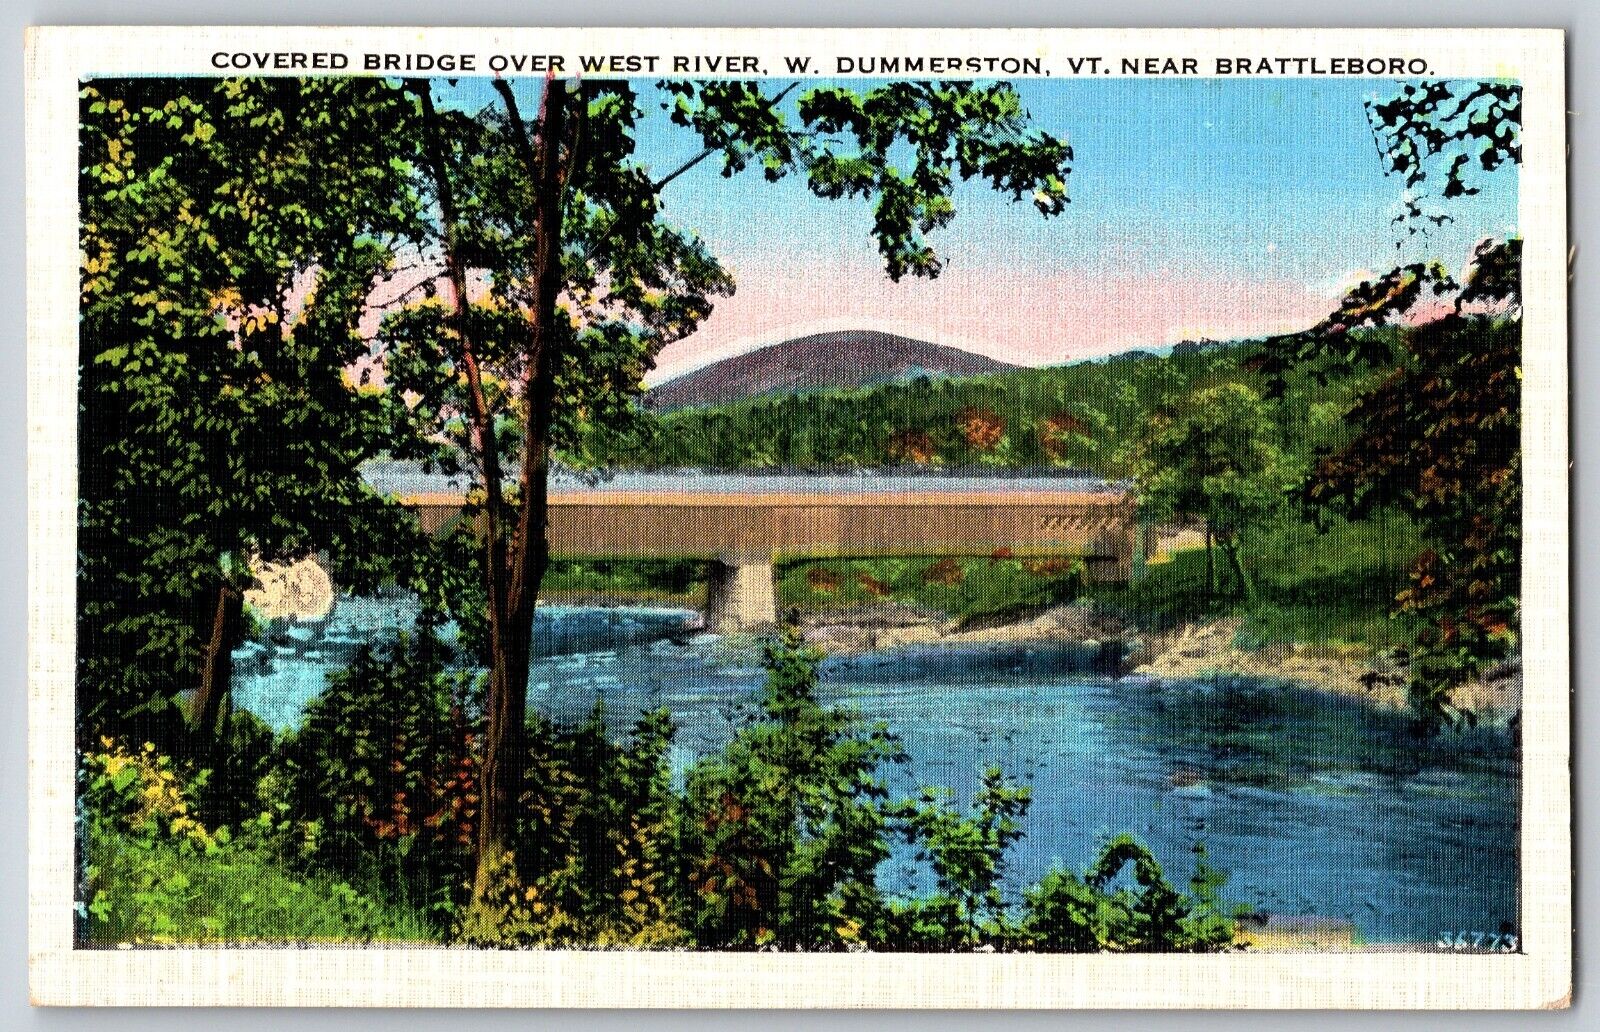 Battleboro, Vermont - View of Covered Bridge over West River - Vintage Postcard